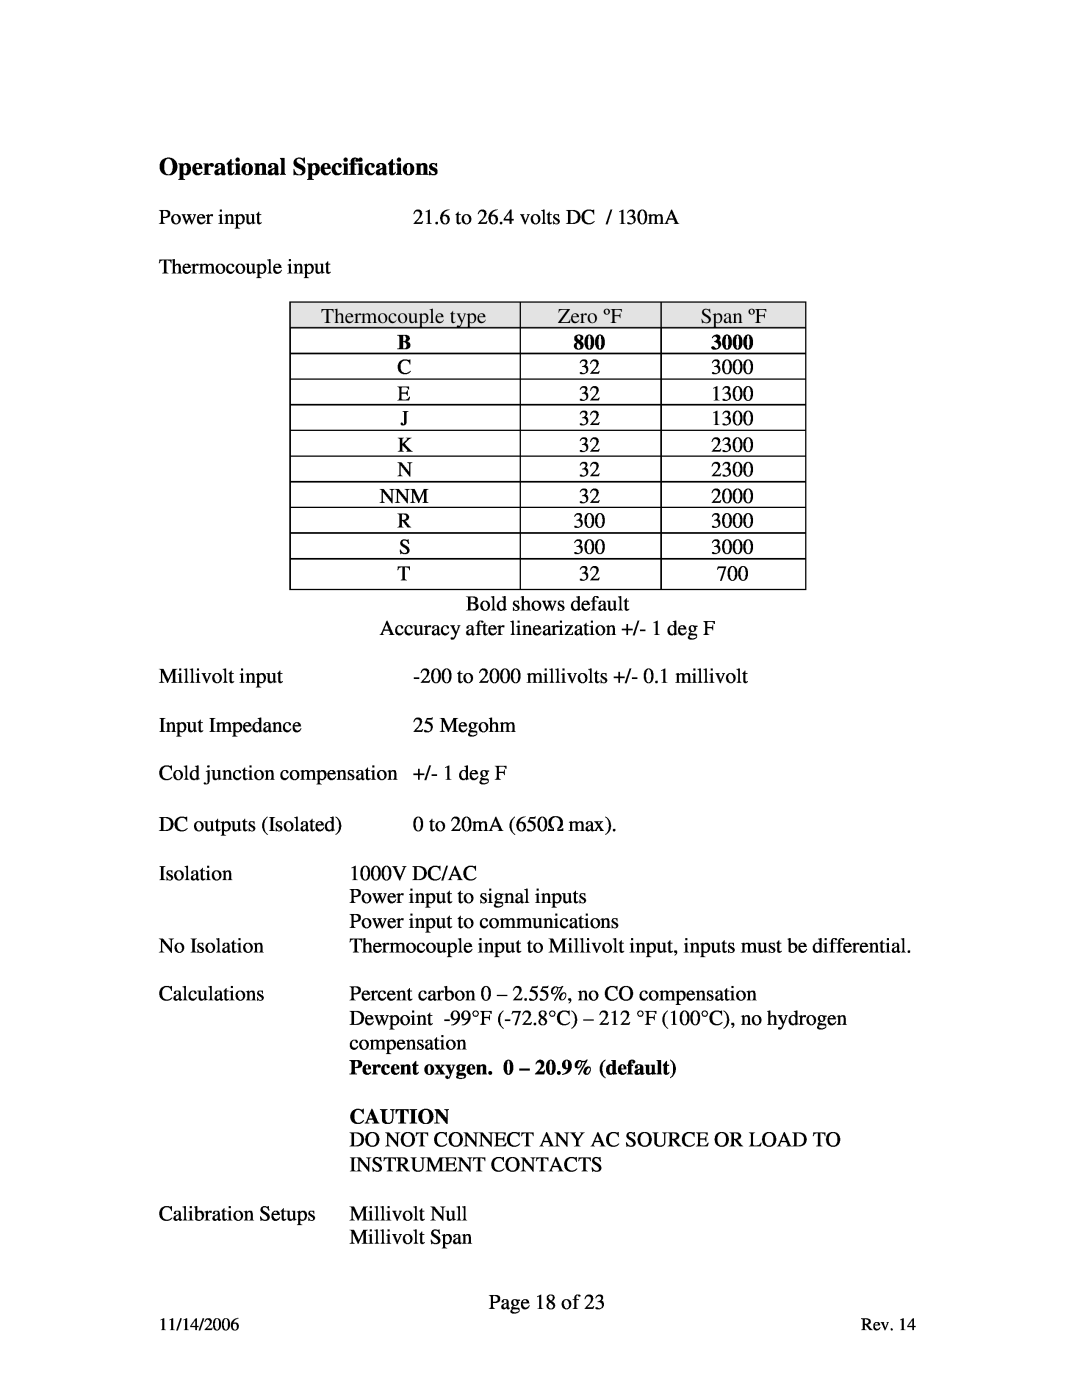 Marathon F200060 manual Operational Specifications, 3000, Percent oxygen. 0 - 20.9% default 